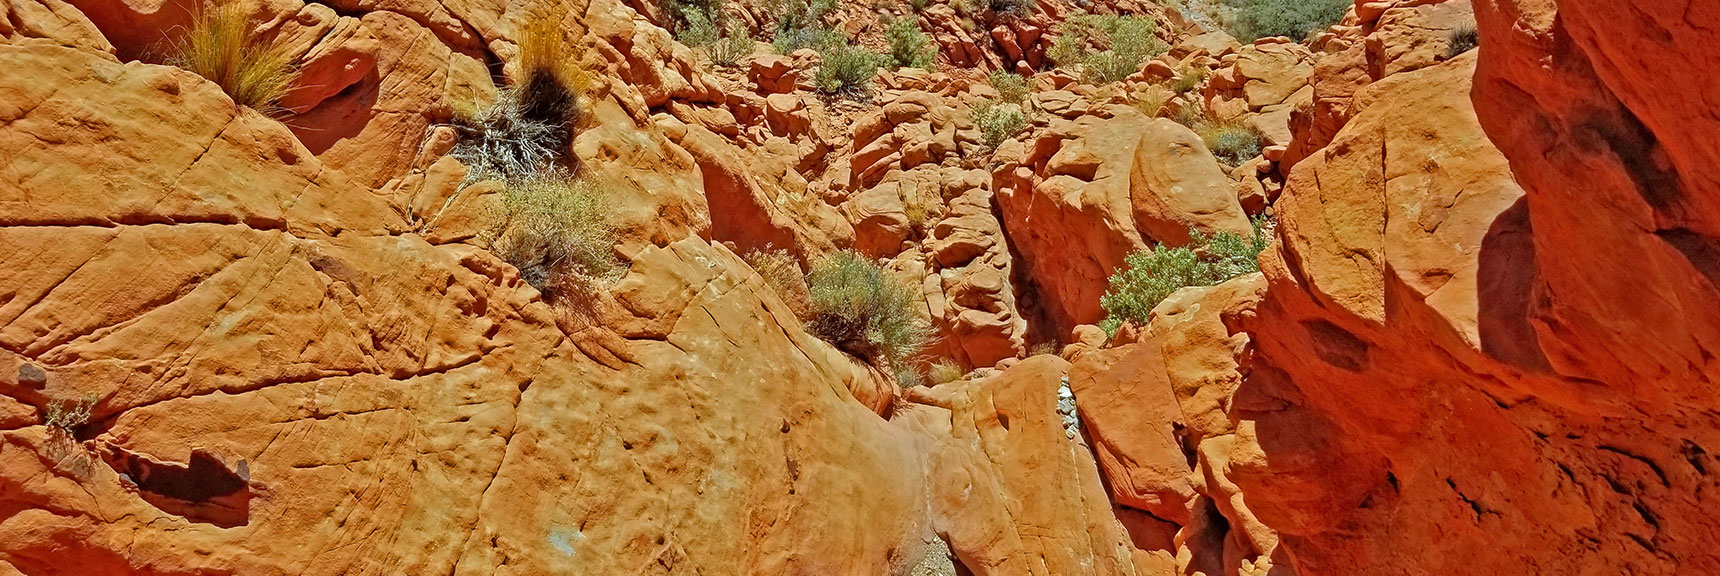 Descending a Gap Between Red Rock Cliffs | Little Red Rock Las Vegas, Nevada, Near La Madre Mountains Wilderness